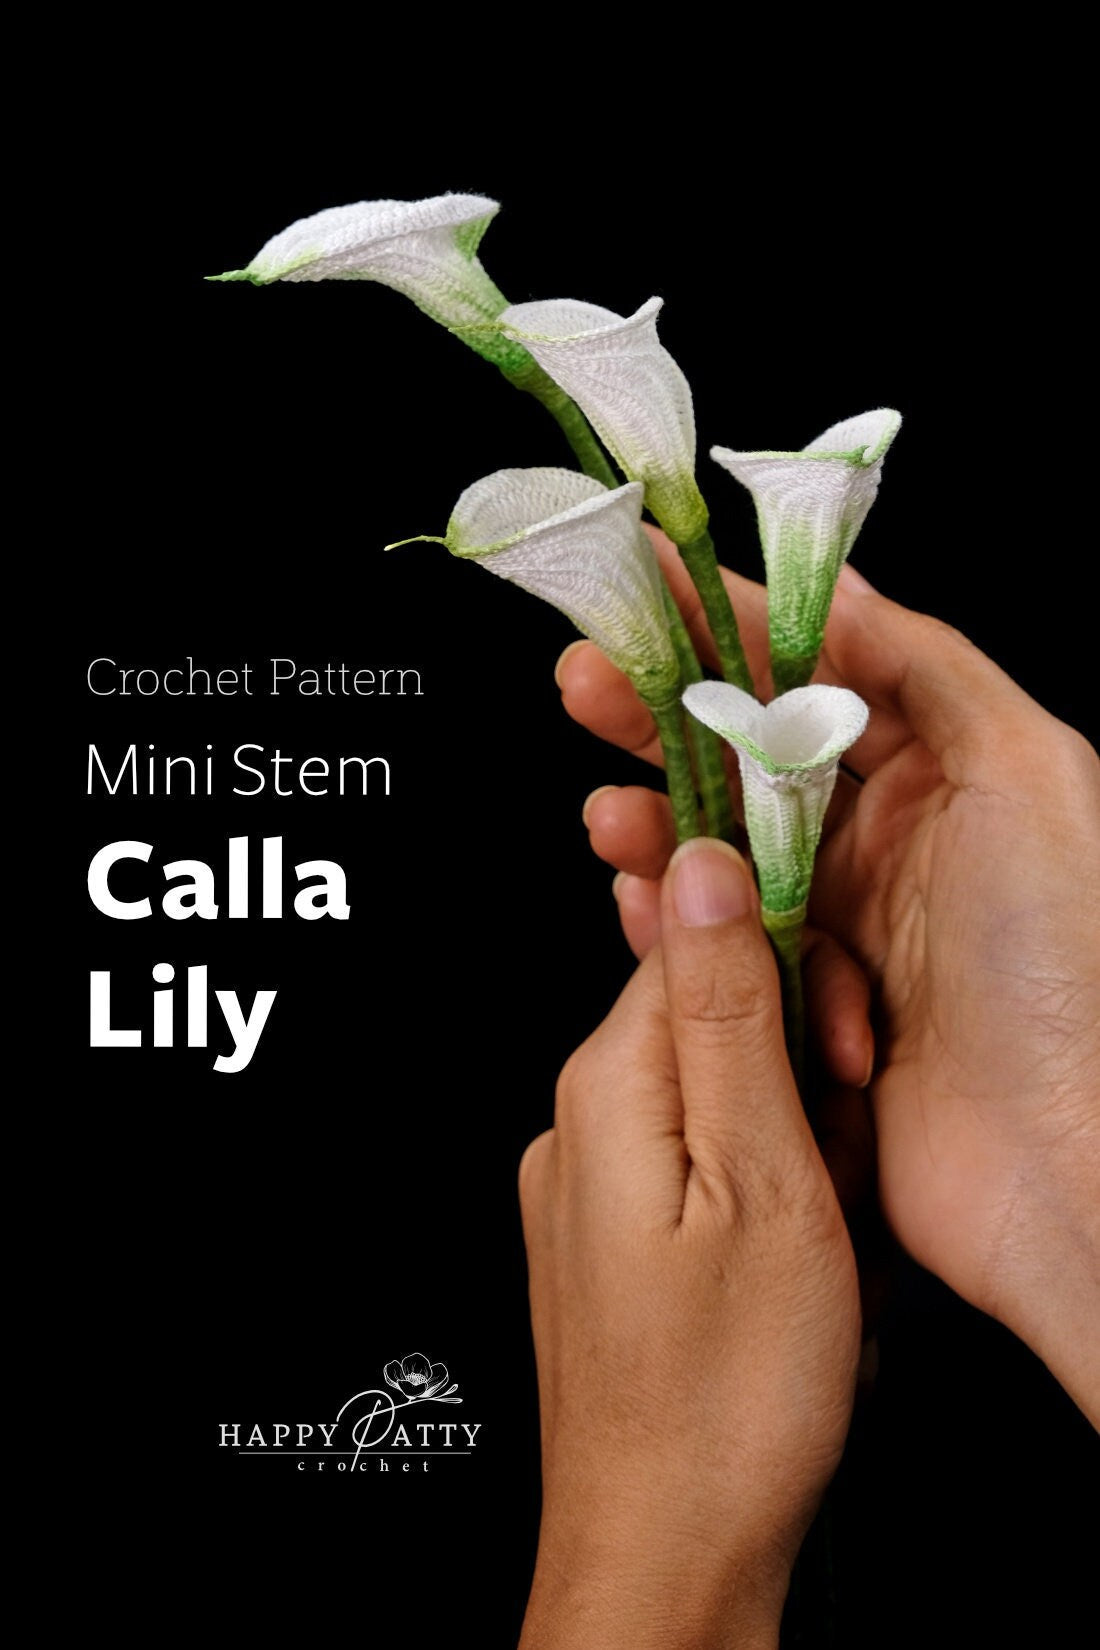 Crochet Mini Stem Calla Lily Pattern - Crochet Flower Pattern for a Miniature Calla Lily